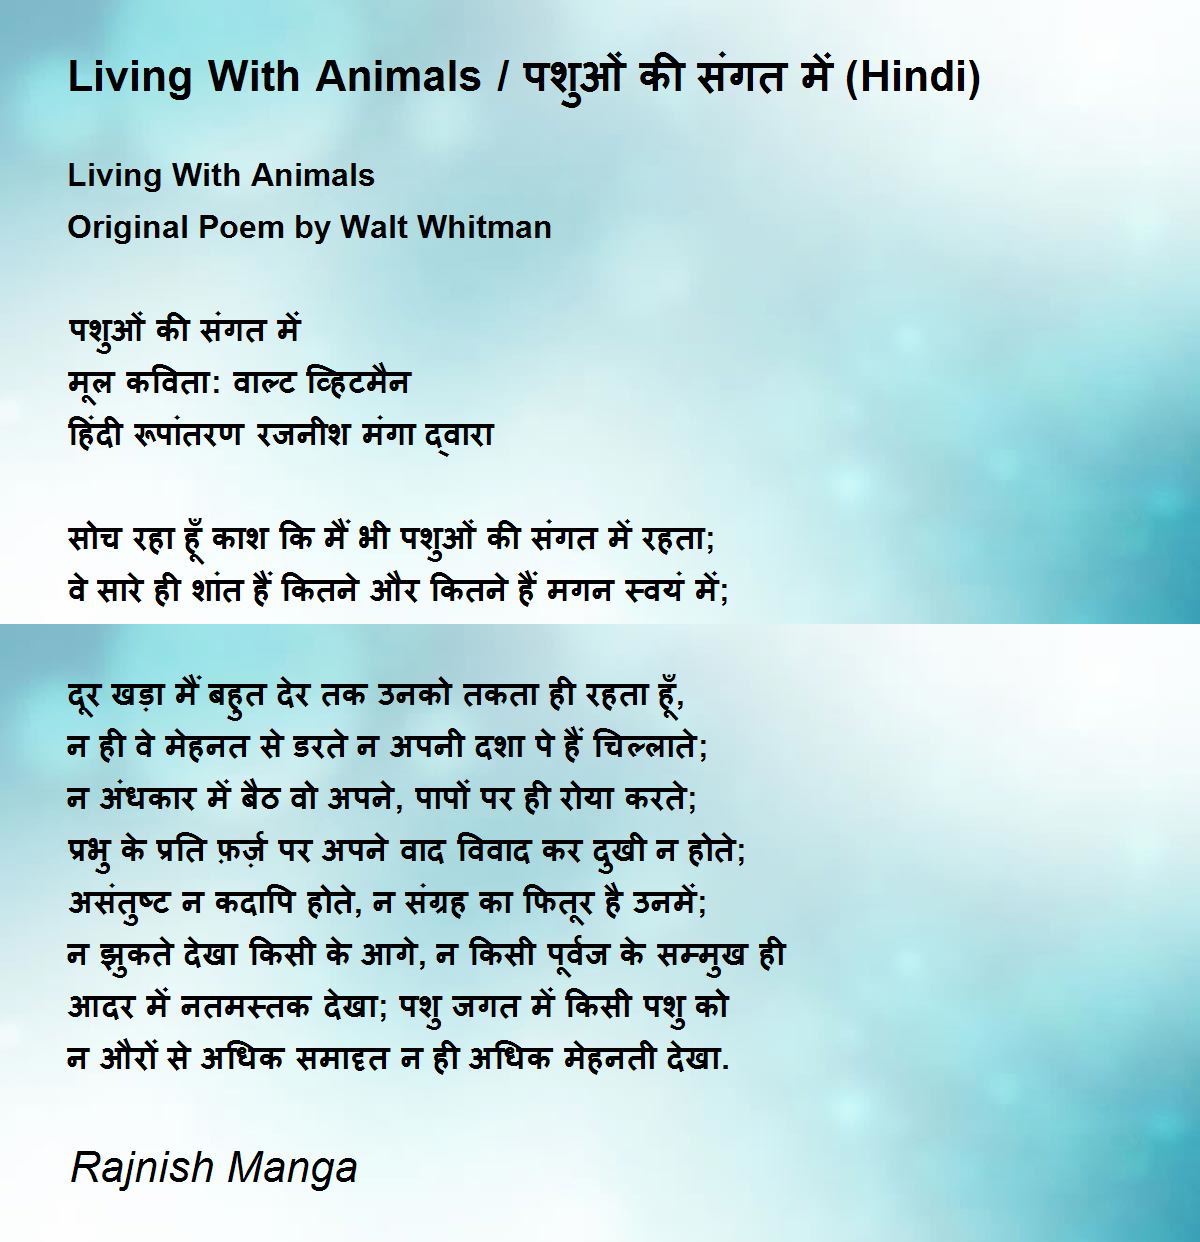 Living With Animals / पशुओं की संगत में (Hindi) - Living With Animals /  पशुओं की संगत में (Hindi) Poem by Rajnish Manga